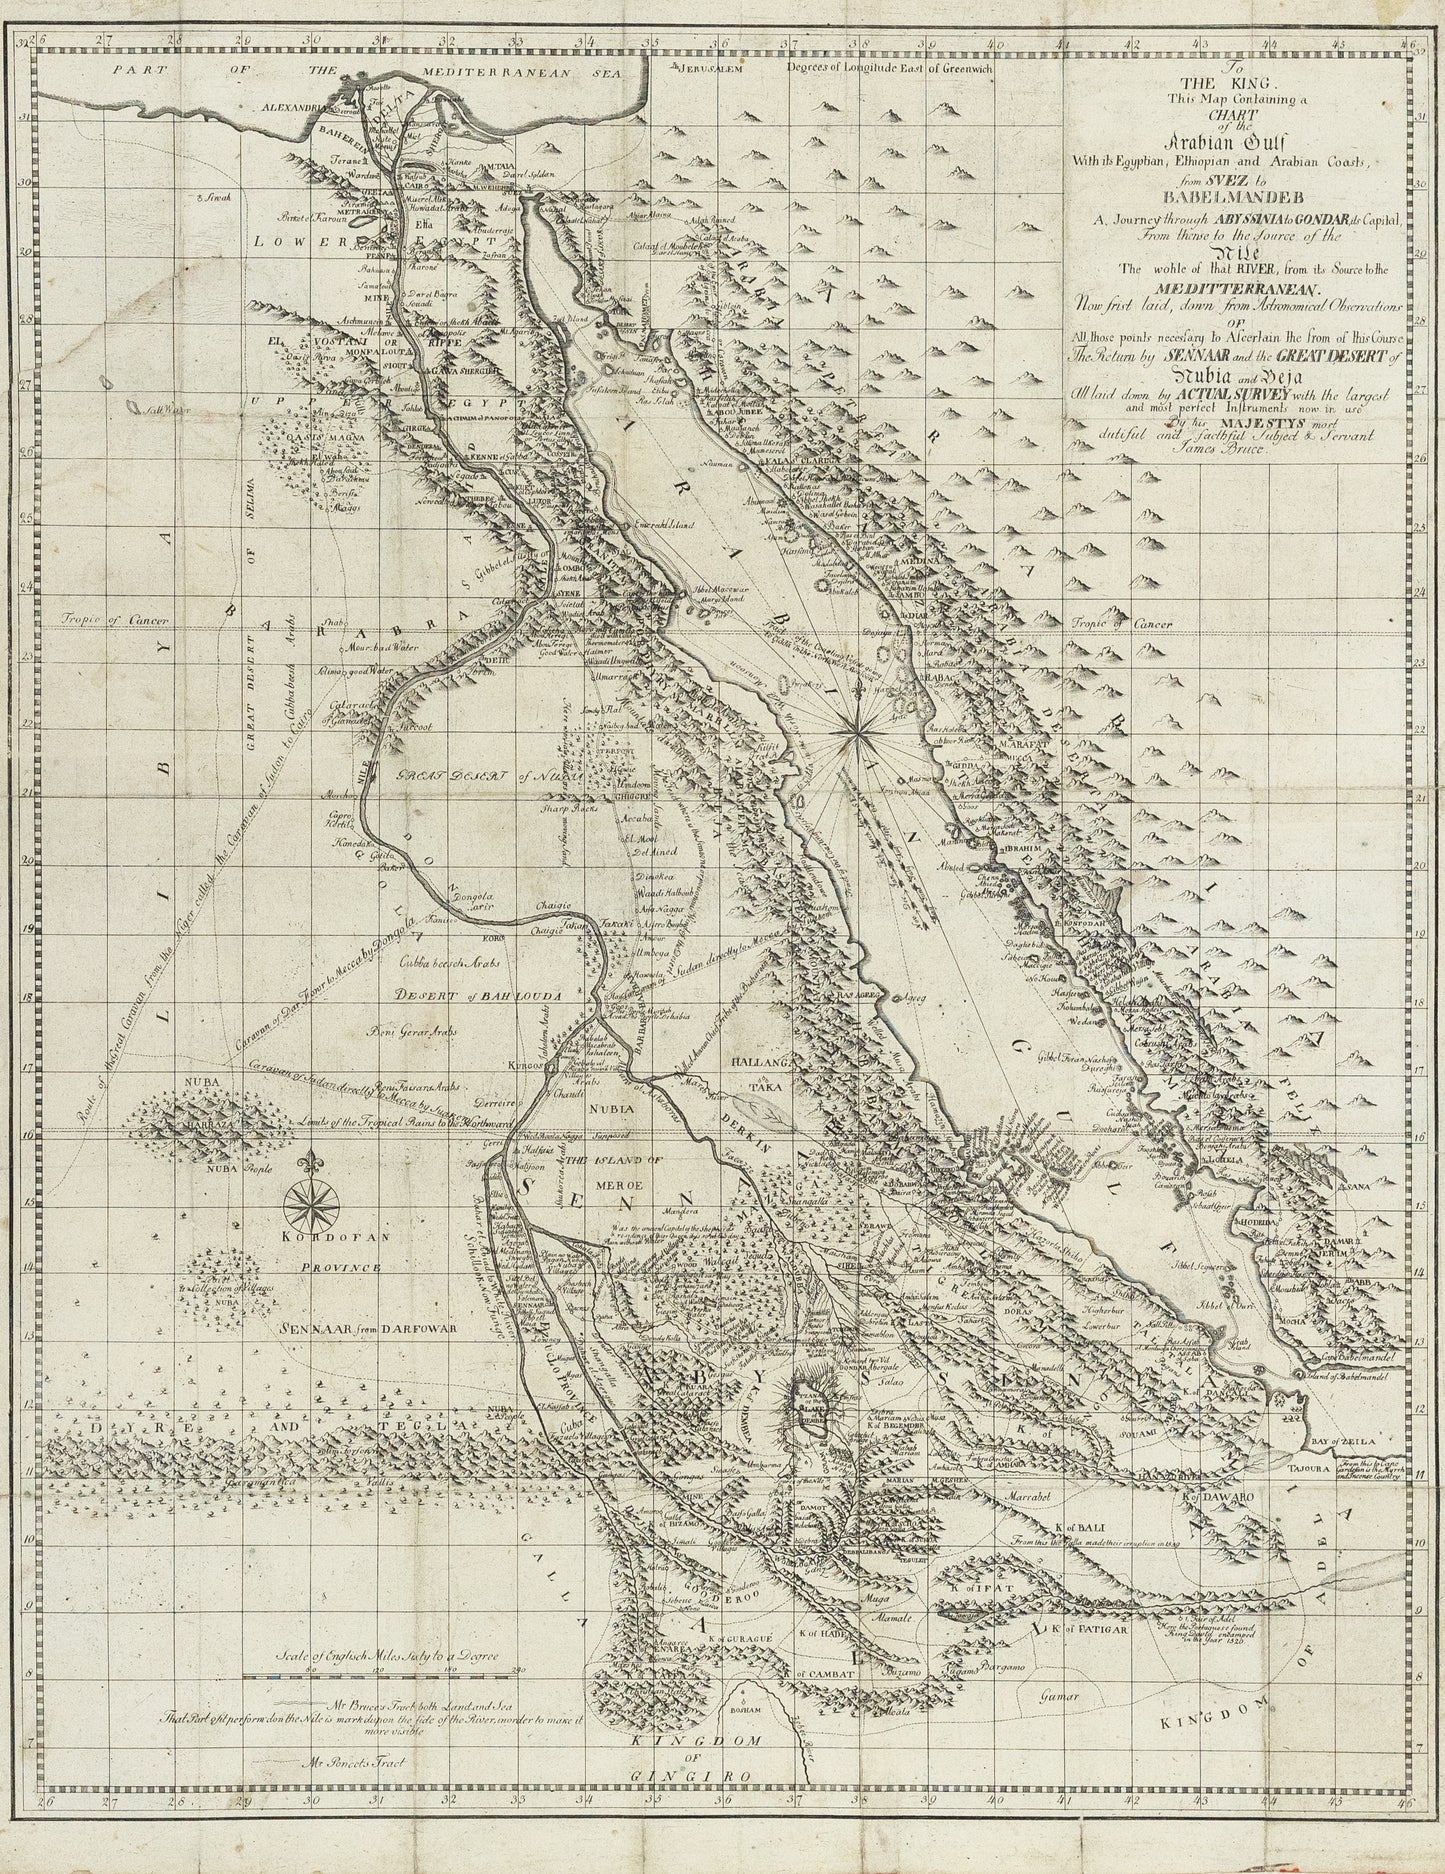 Bruce, James. Arabian Gulf with it's Egyptian, Ethiopian, and Arabian coasts. London: c. 1790